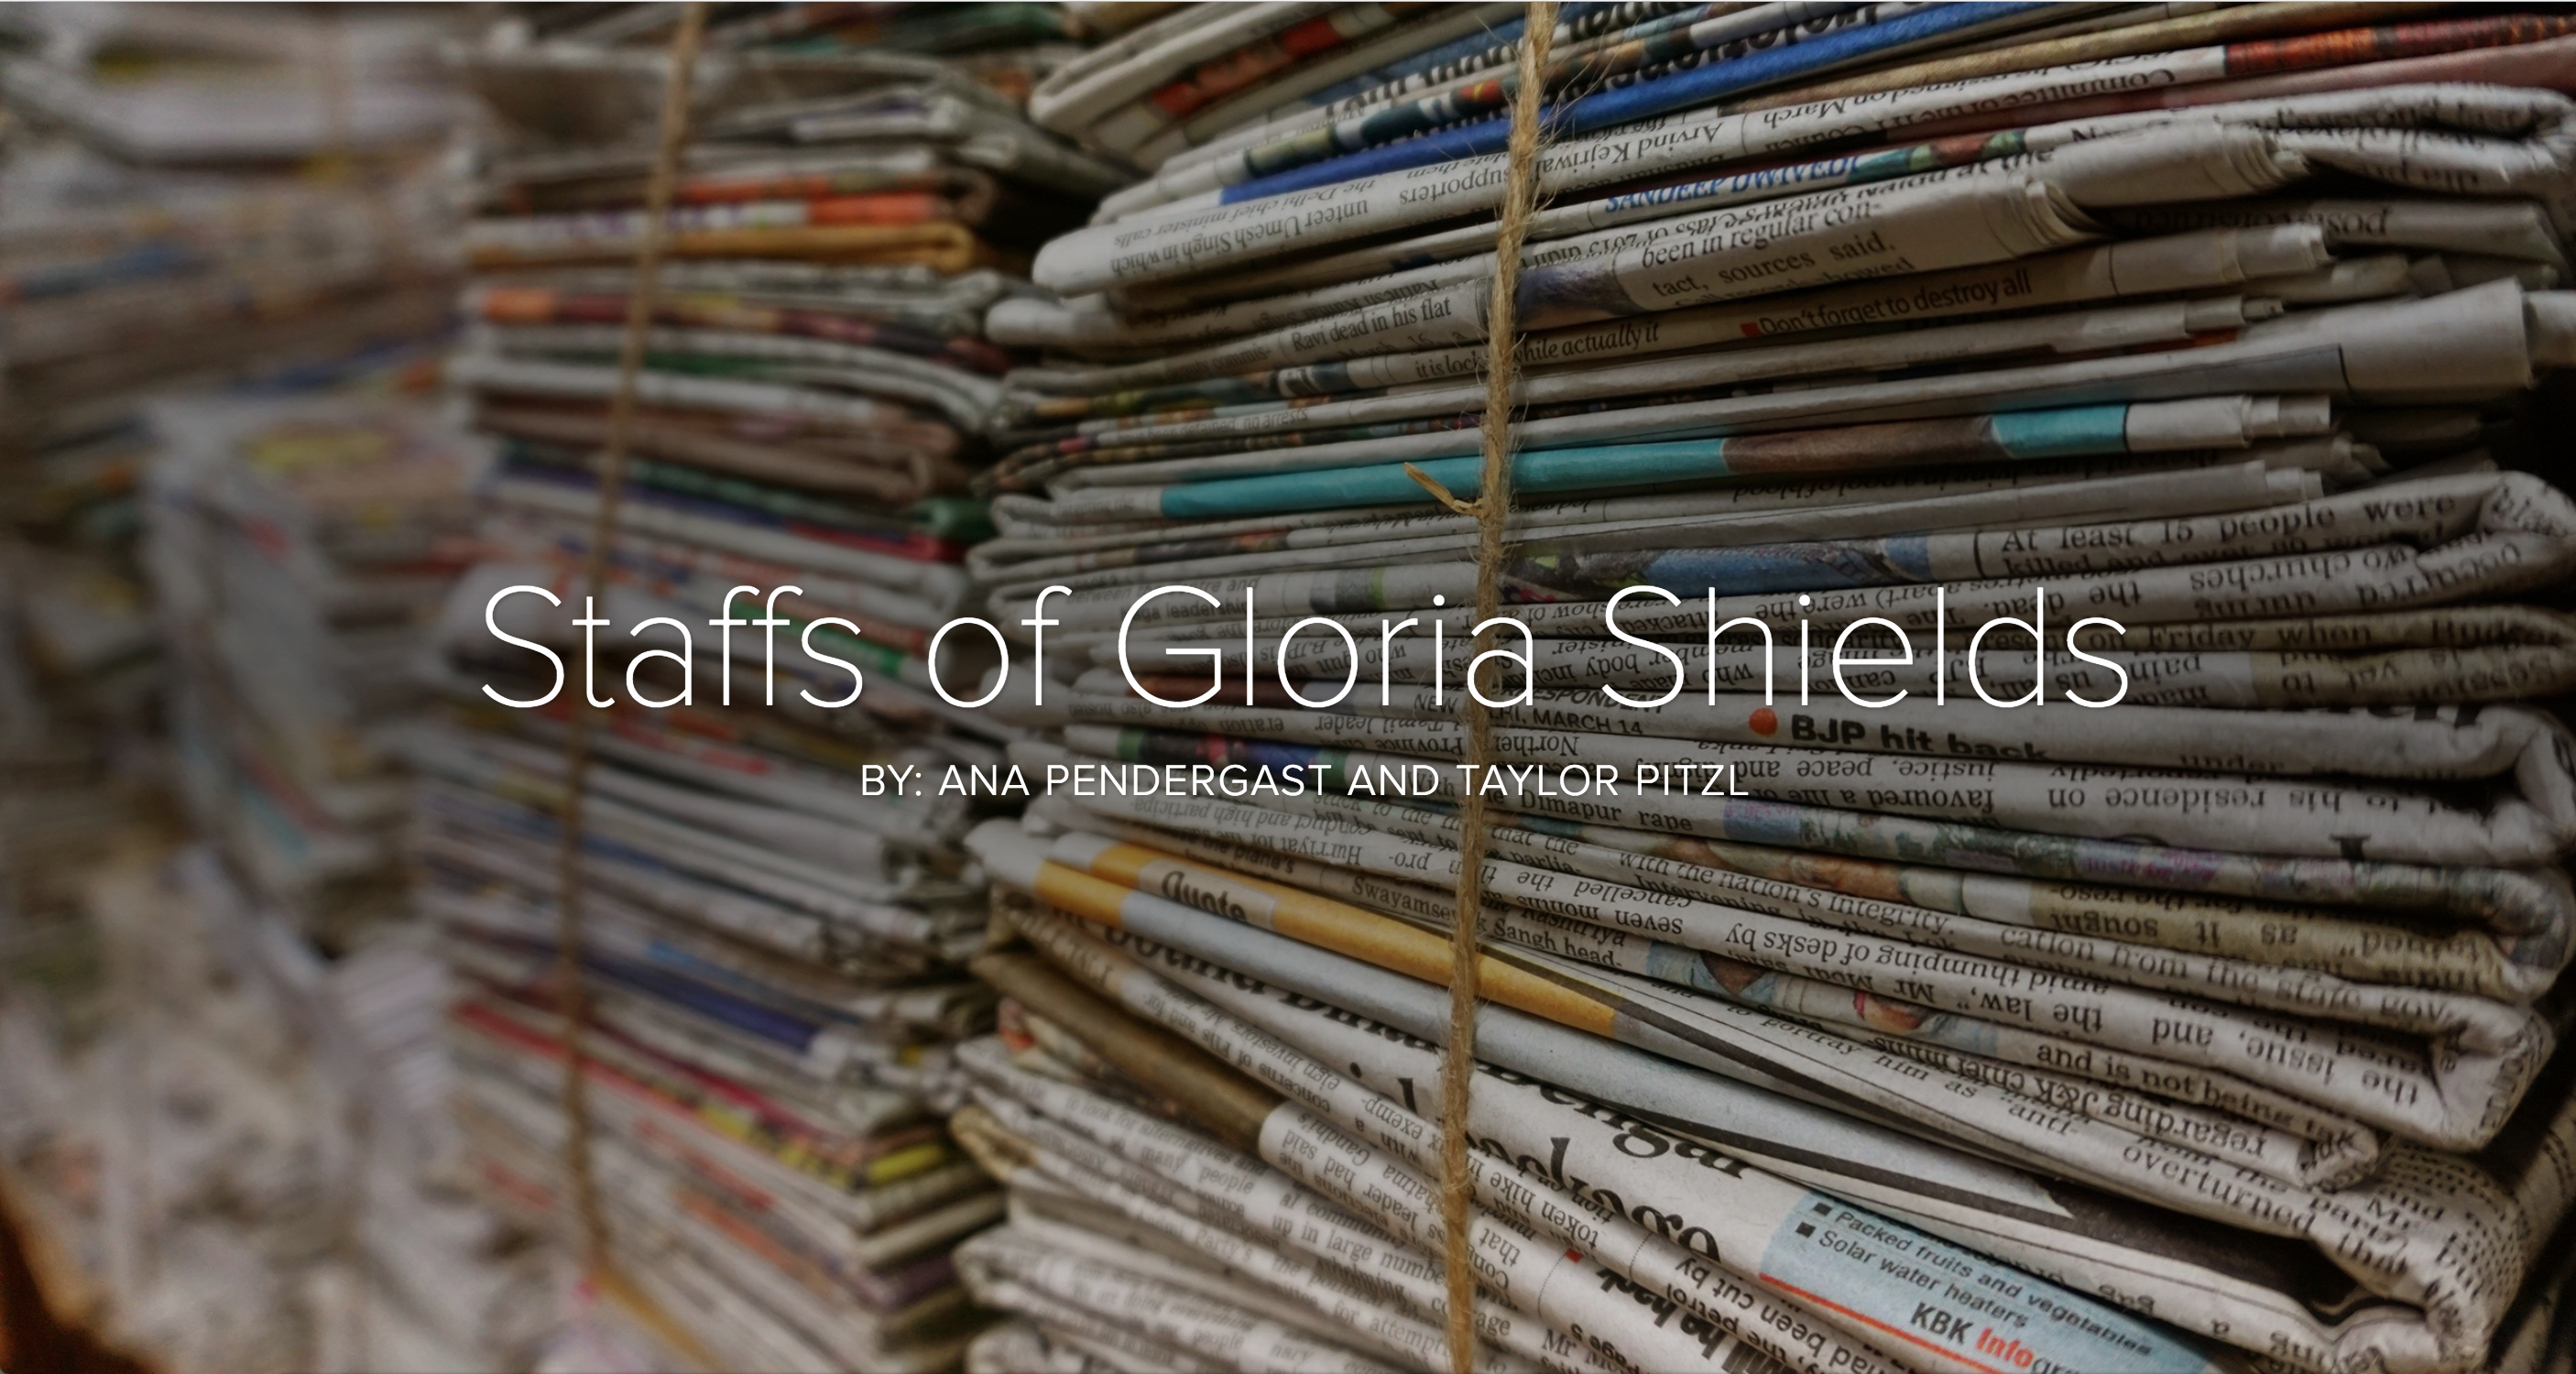 The staffs of Gloria Shields